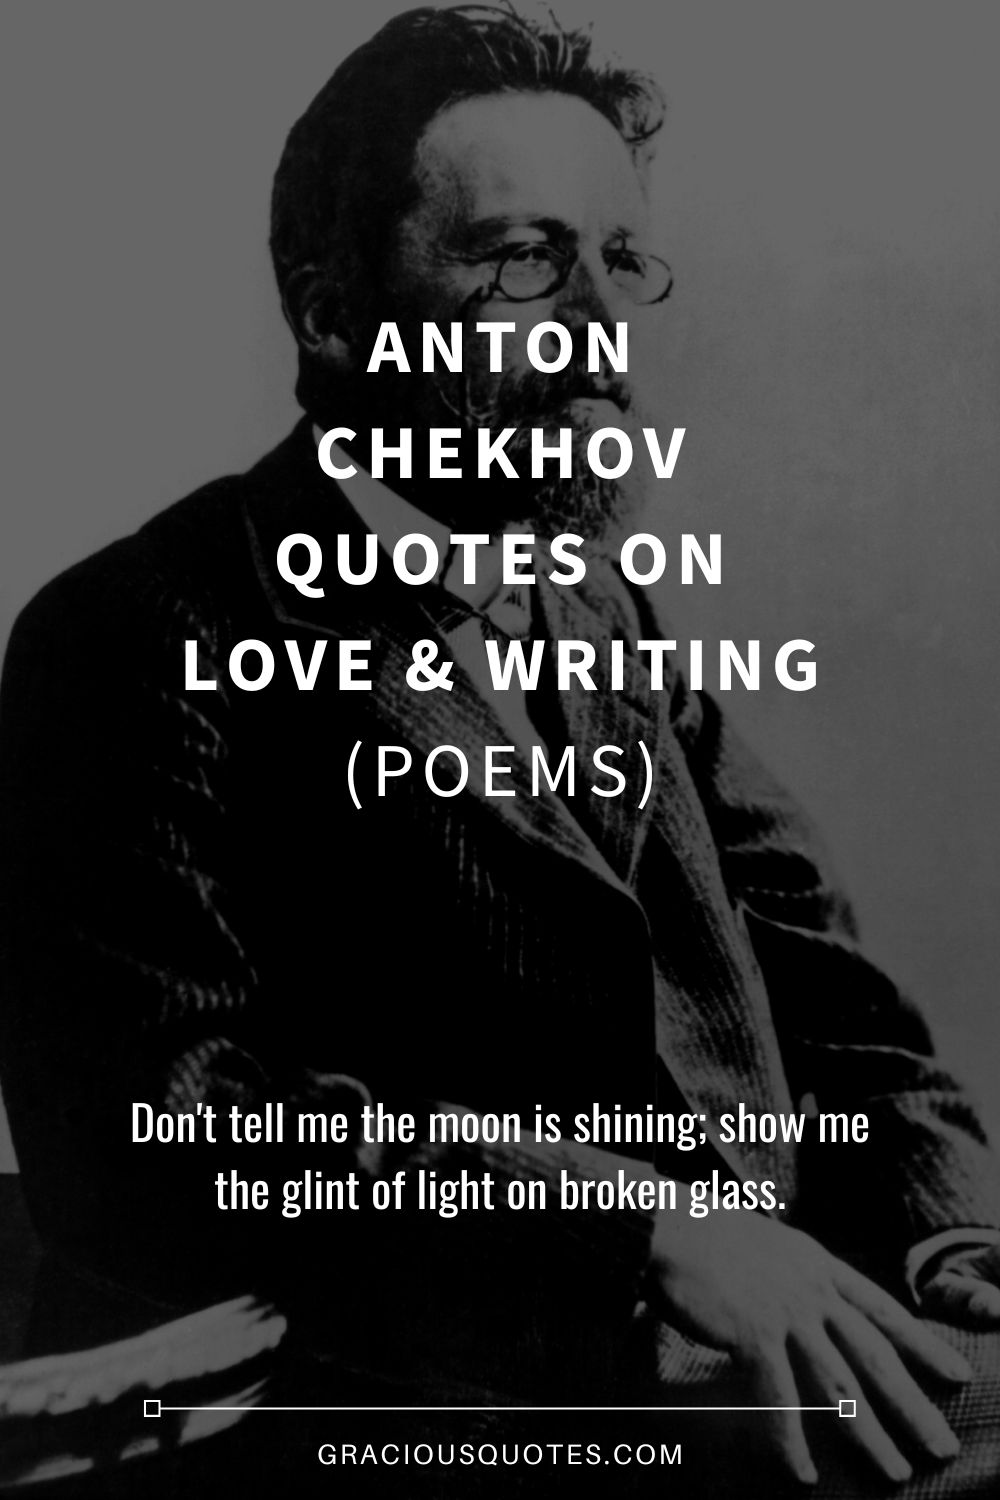 Anton Chekhov Quotes on Love & Writing (POEMS) - Gracious Quotes